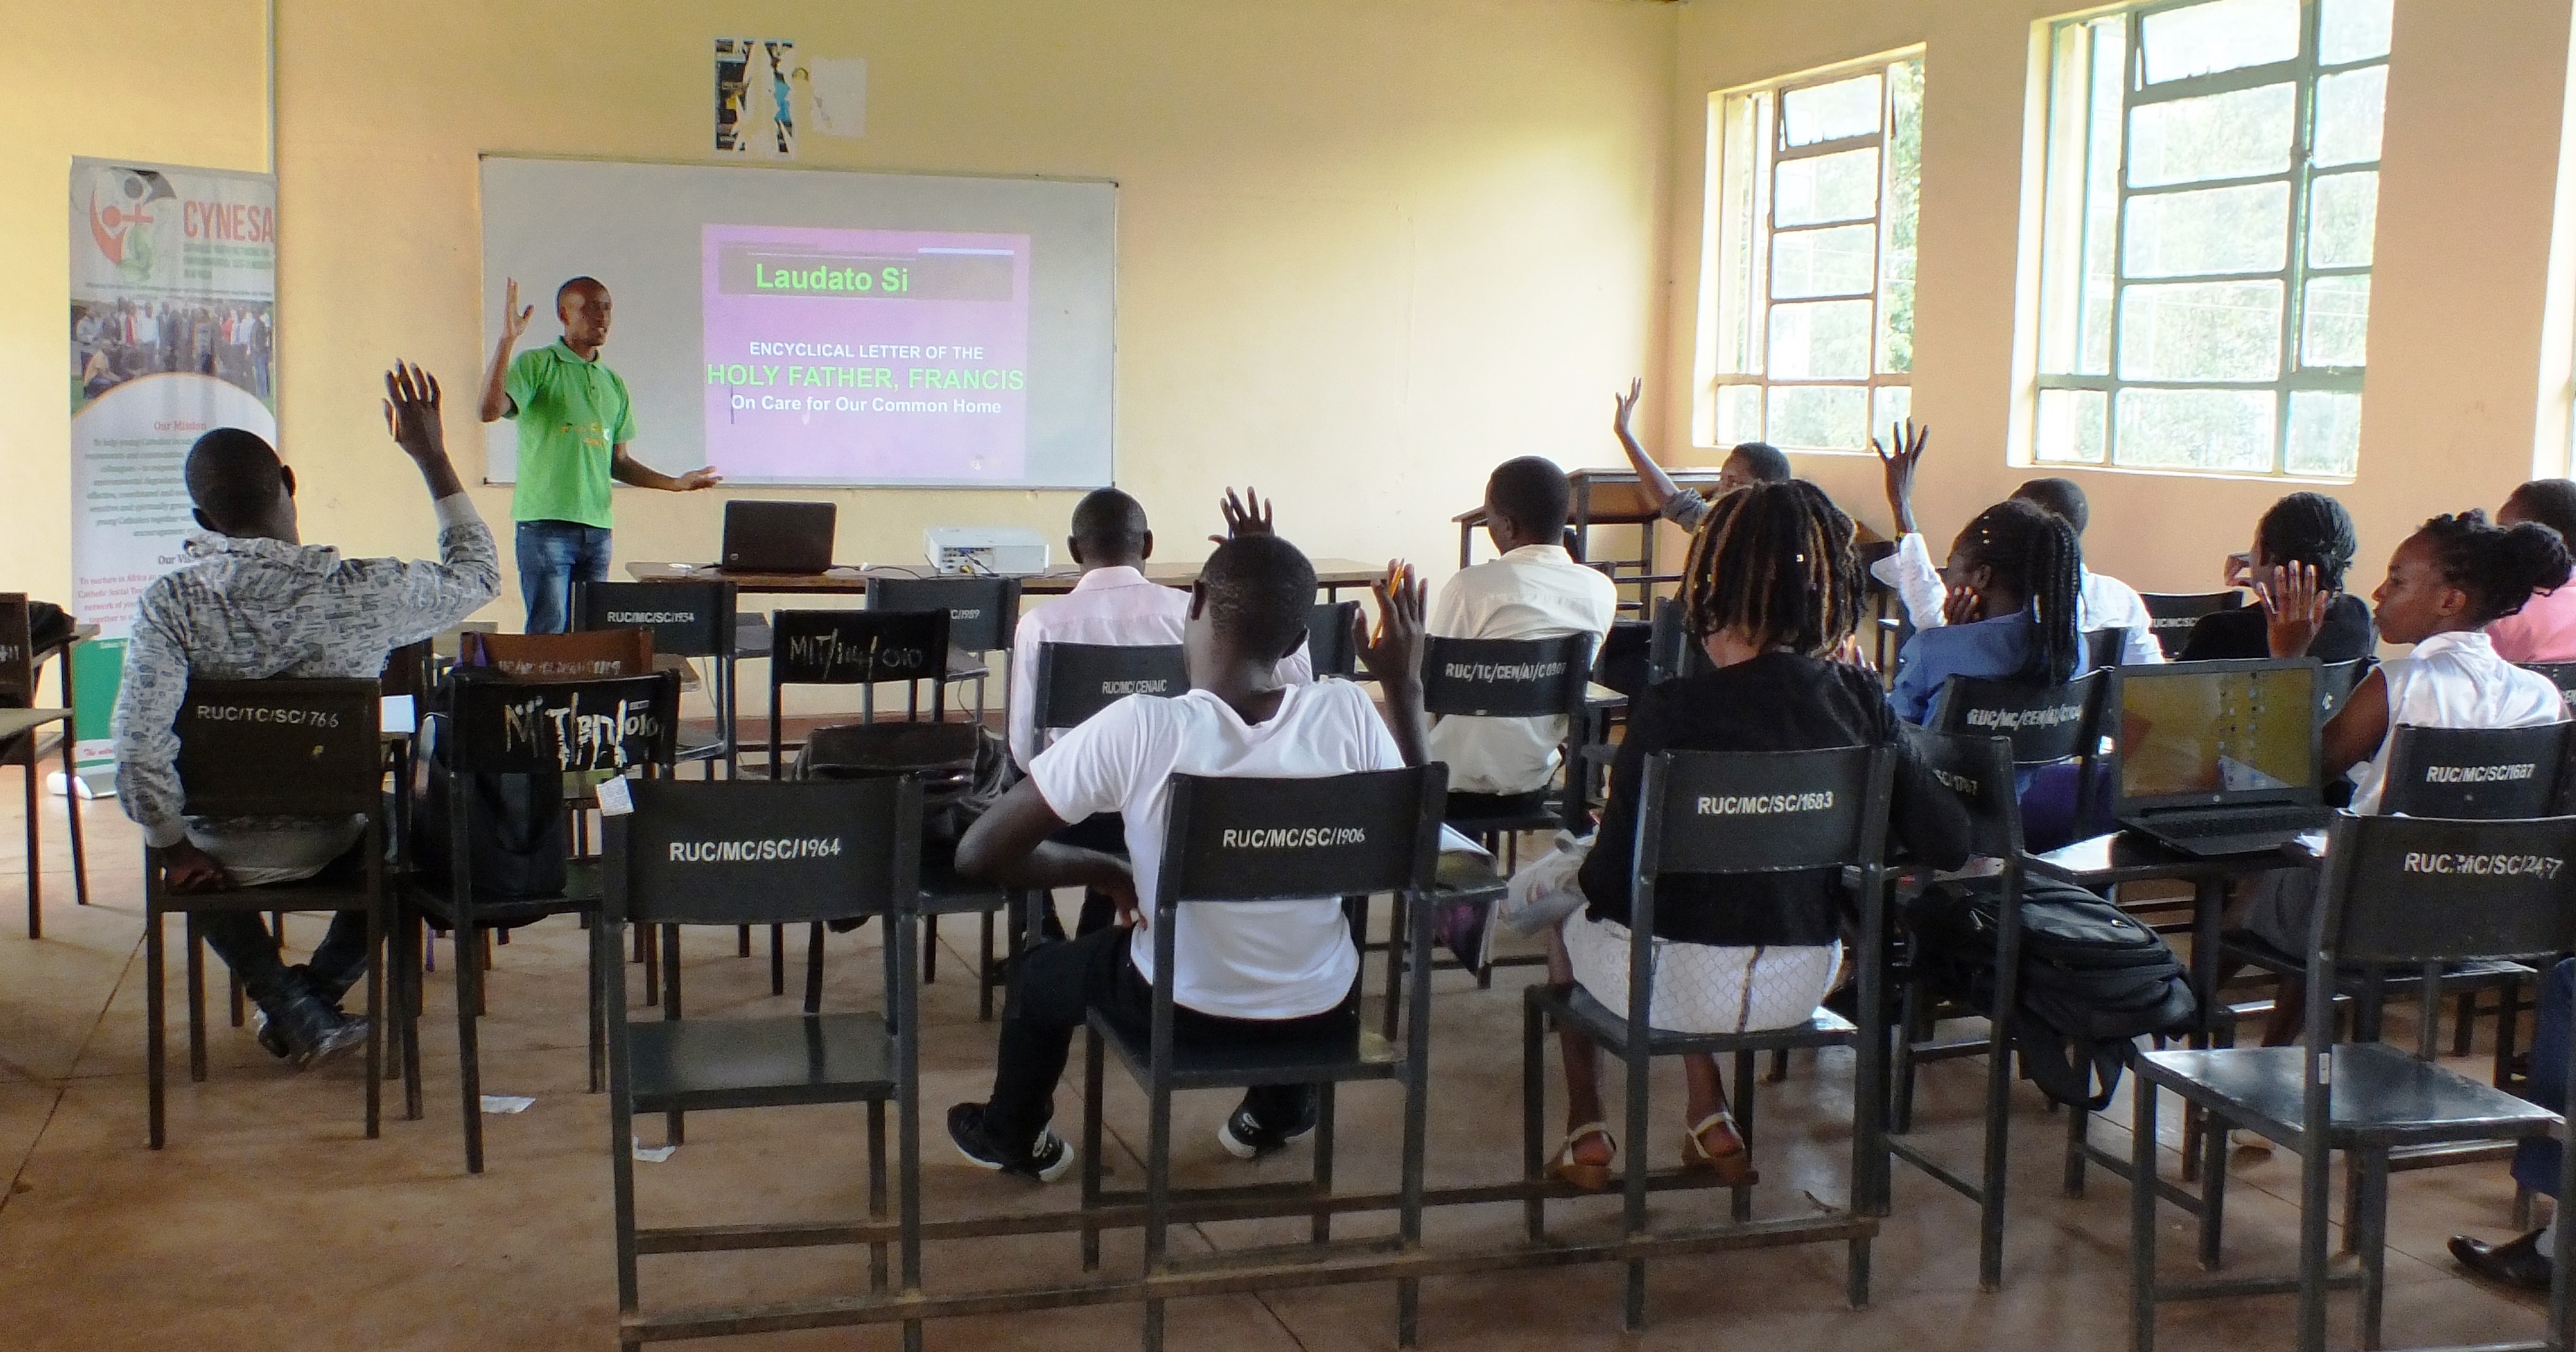 CYNESA Laudato Si Workshop at Rongo University